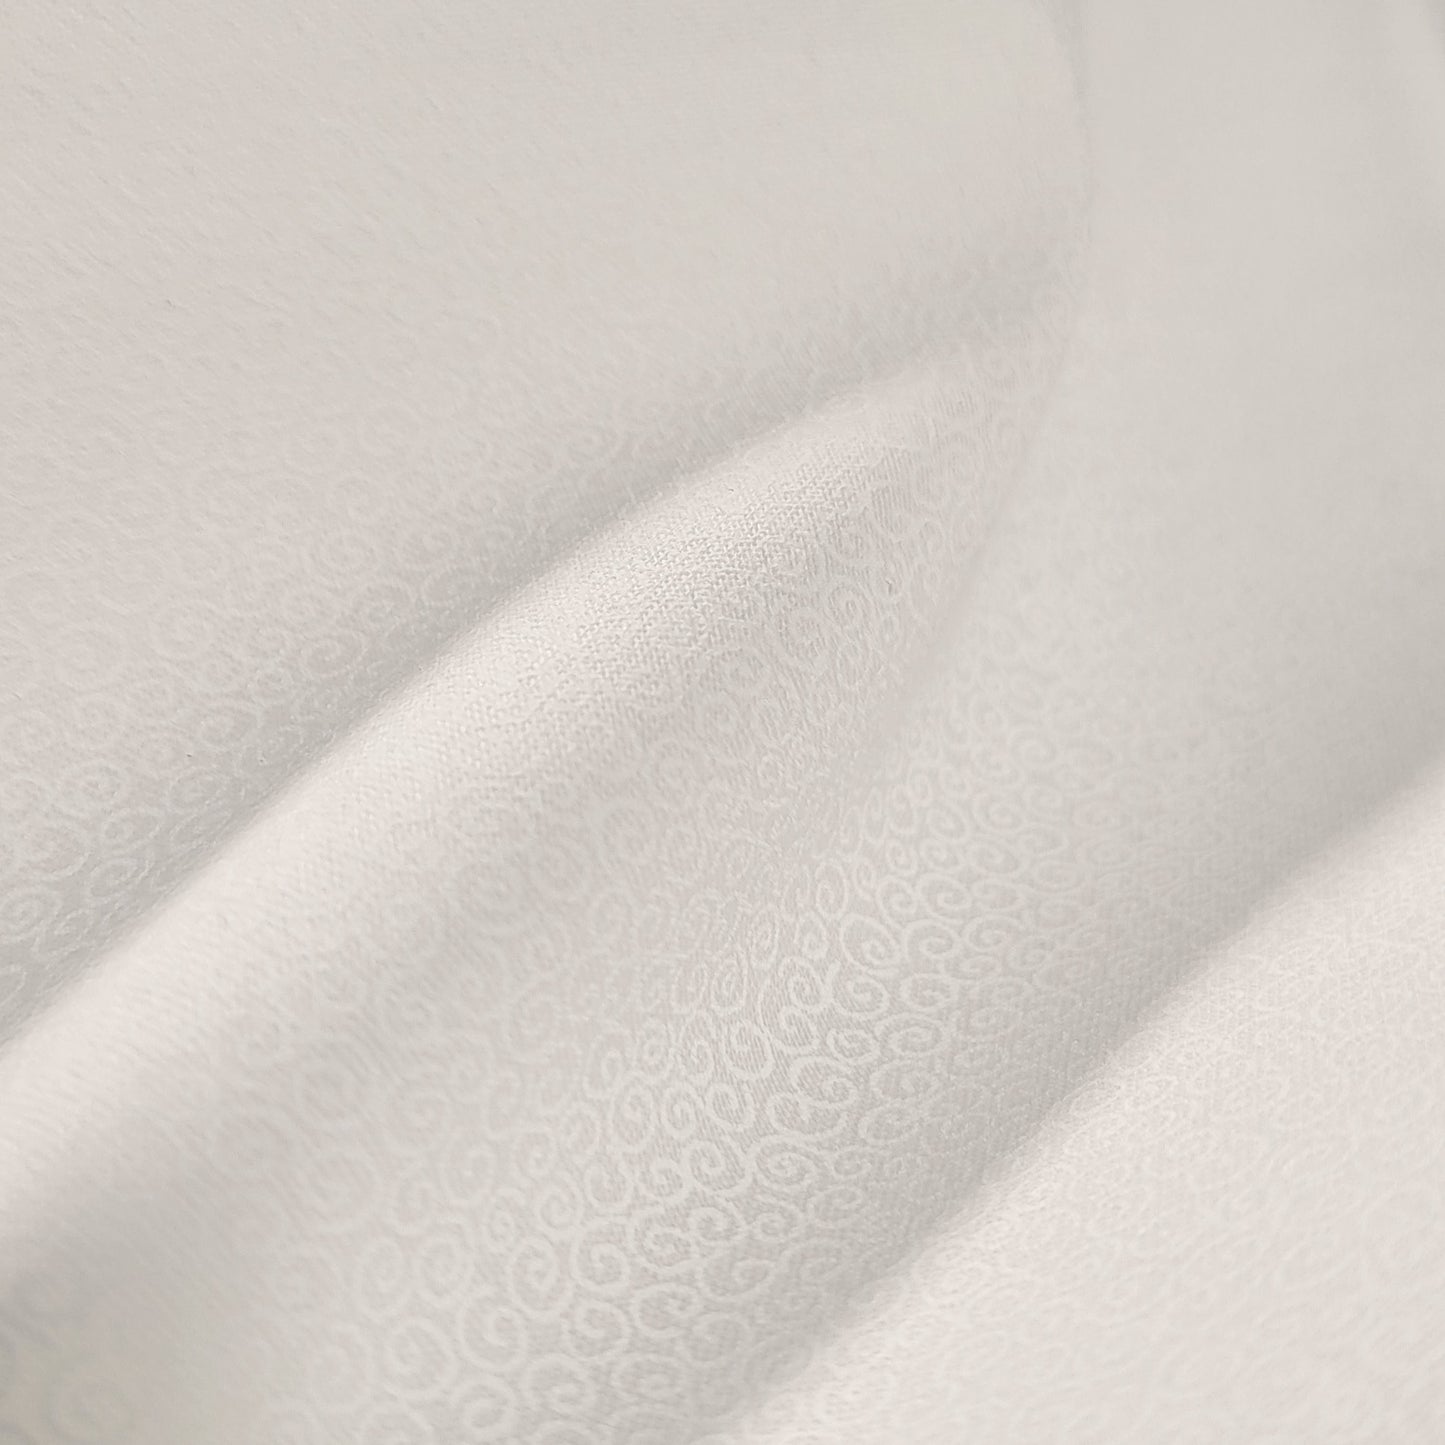 Harmony Prints - White on White - 1250-129 in Swirls - Full Bolt (15m)